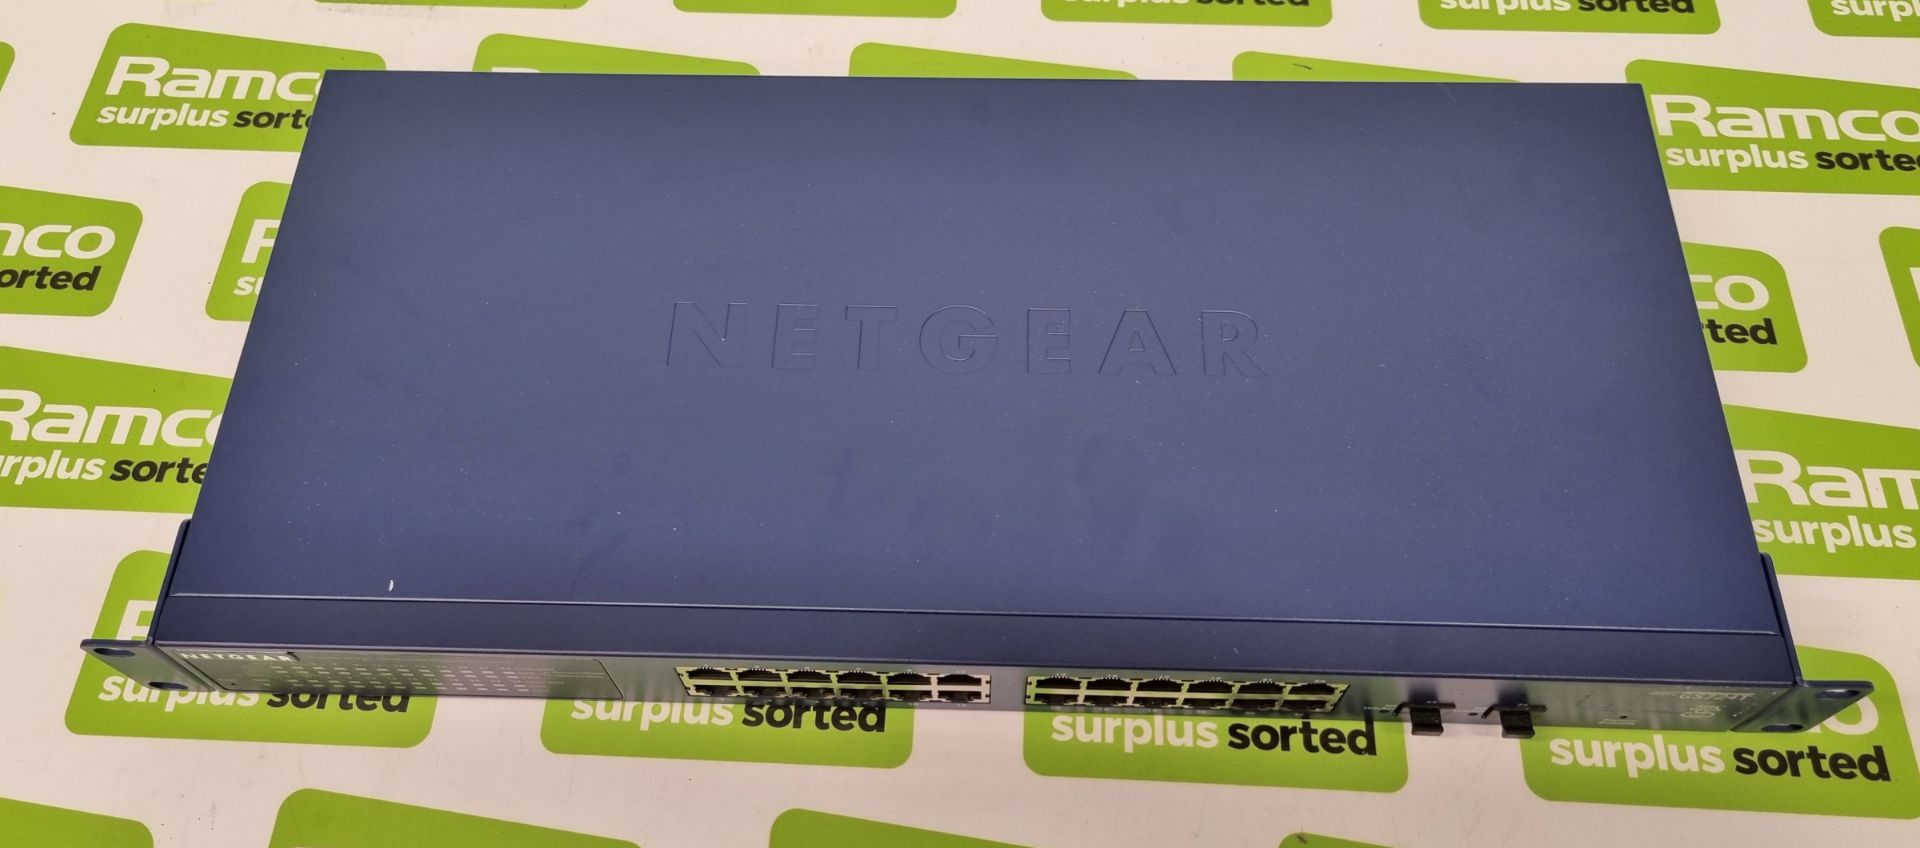 Netgear GS742T 24 port gigabit network switch (rack mountable) - Image 4 of 9